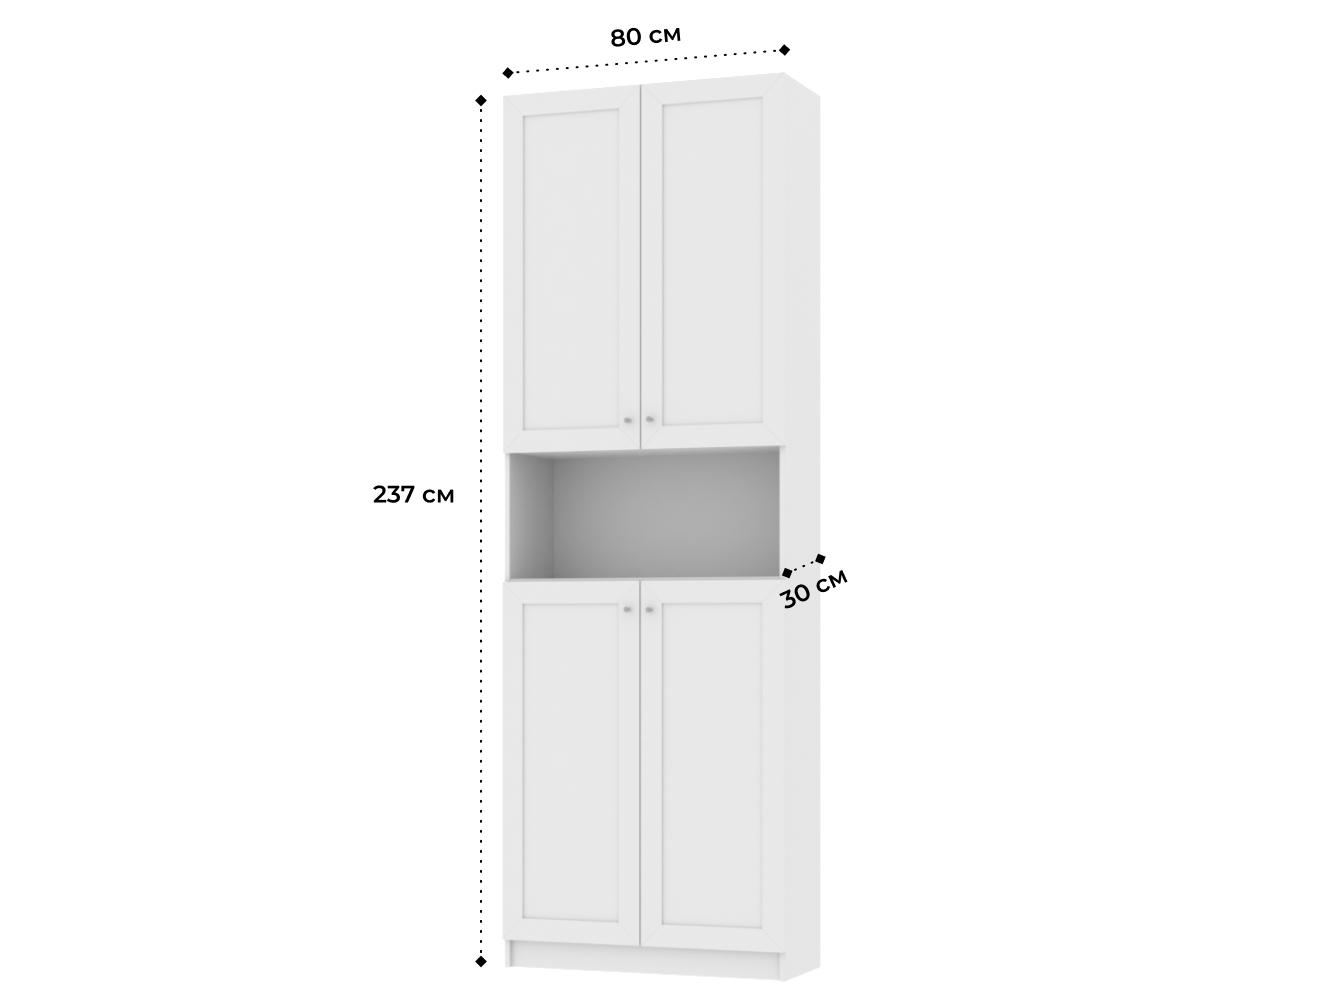  Книжный шкаф Билли 385 white desire ИКЕА (IKEA) изображение товара